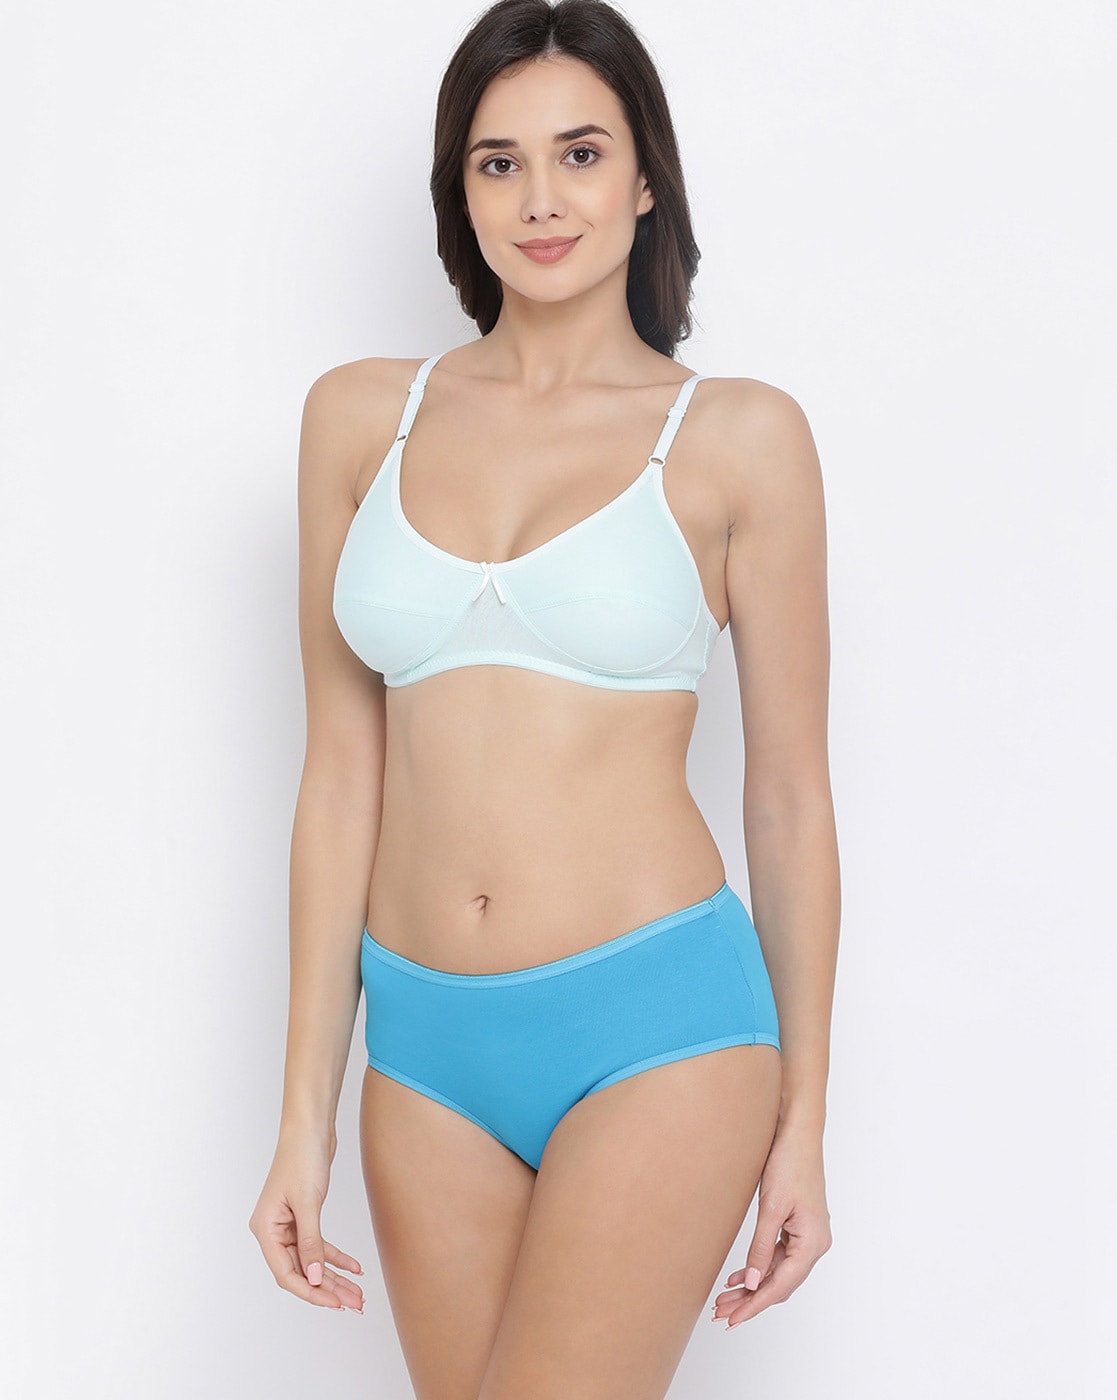 Buy online Blue Polyamide Regular Bra from lingerie for Women by Clovia for  ₹479 at 71% off